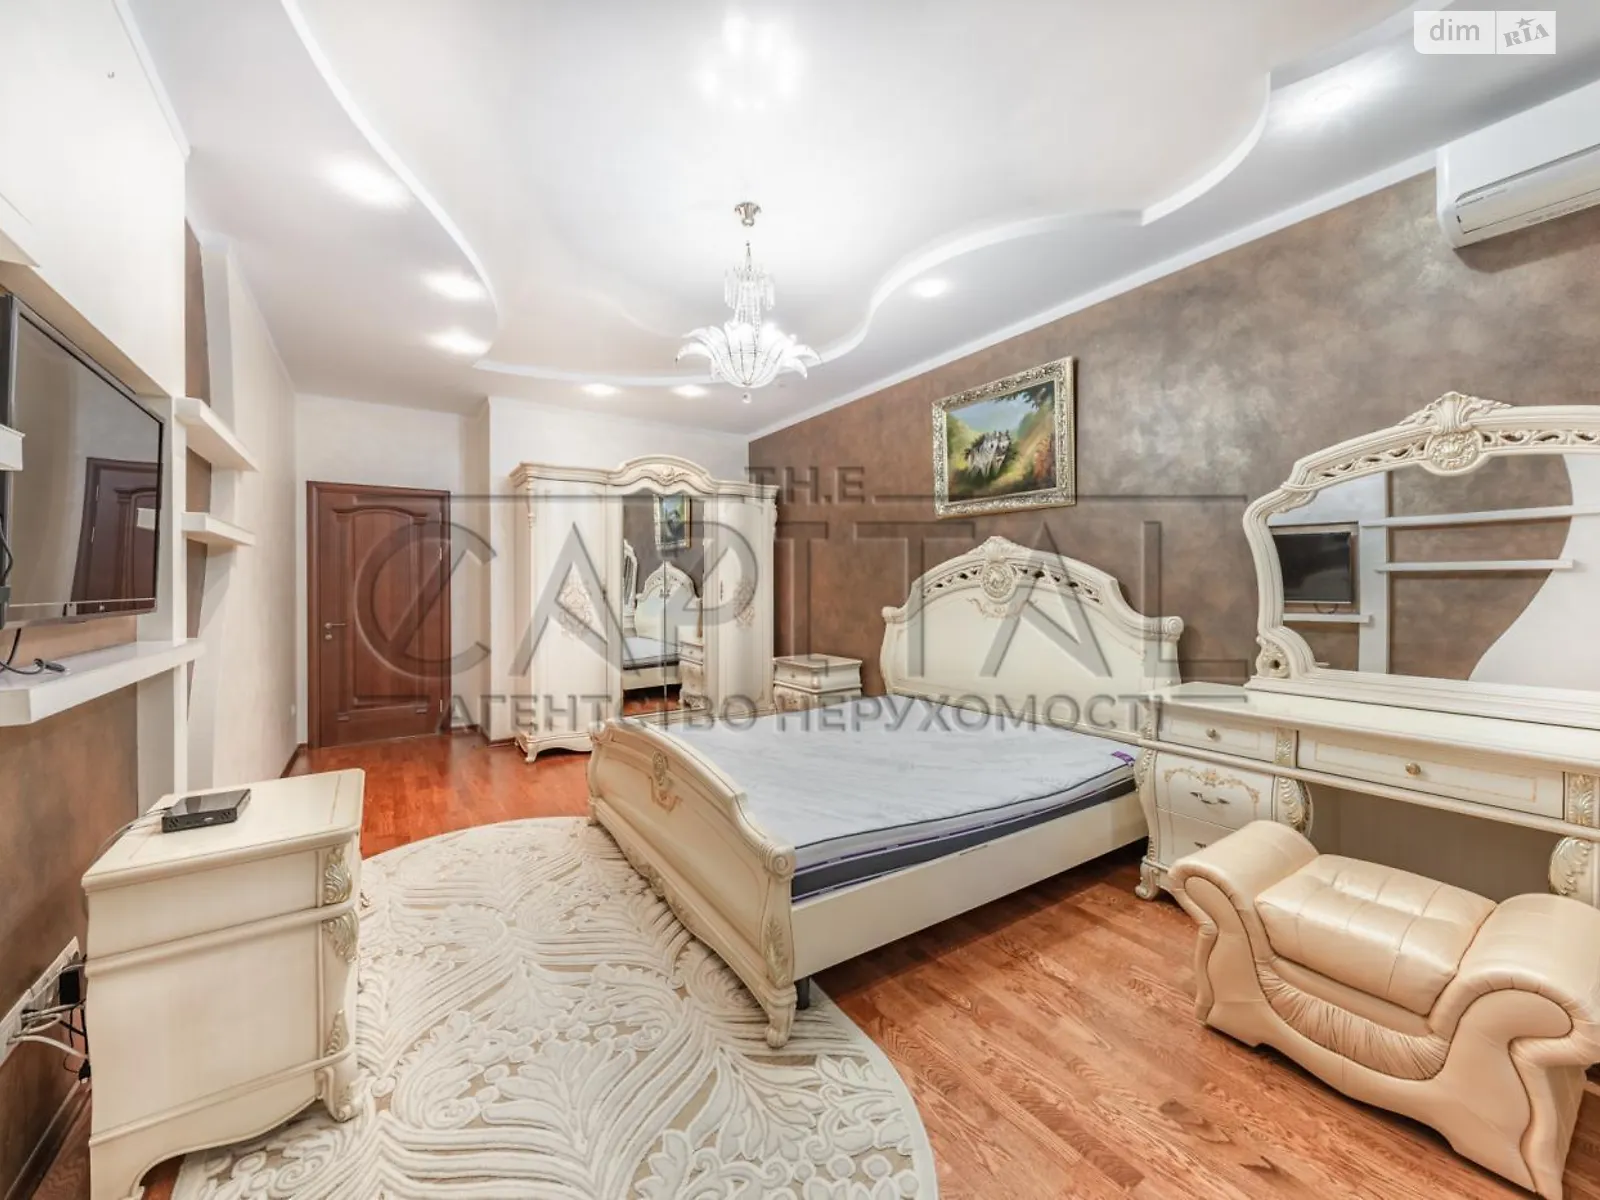 Сдается в аренду 4-комнатная квартира 155.5 кв. м в Киеве, бул. Леси Украинки, 7А - фото 1